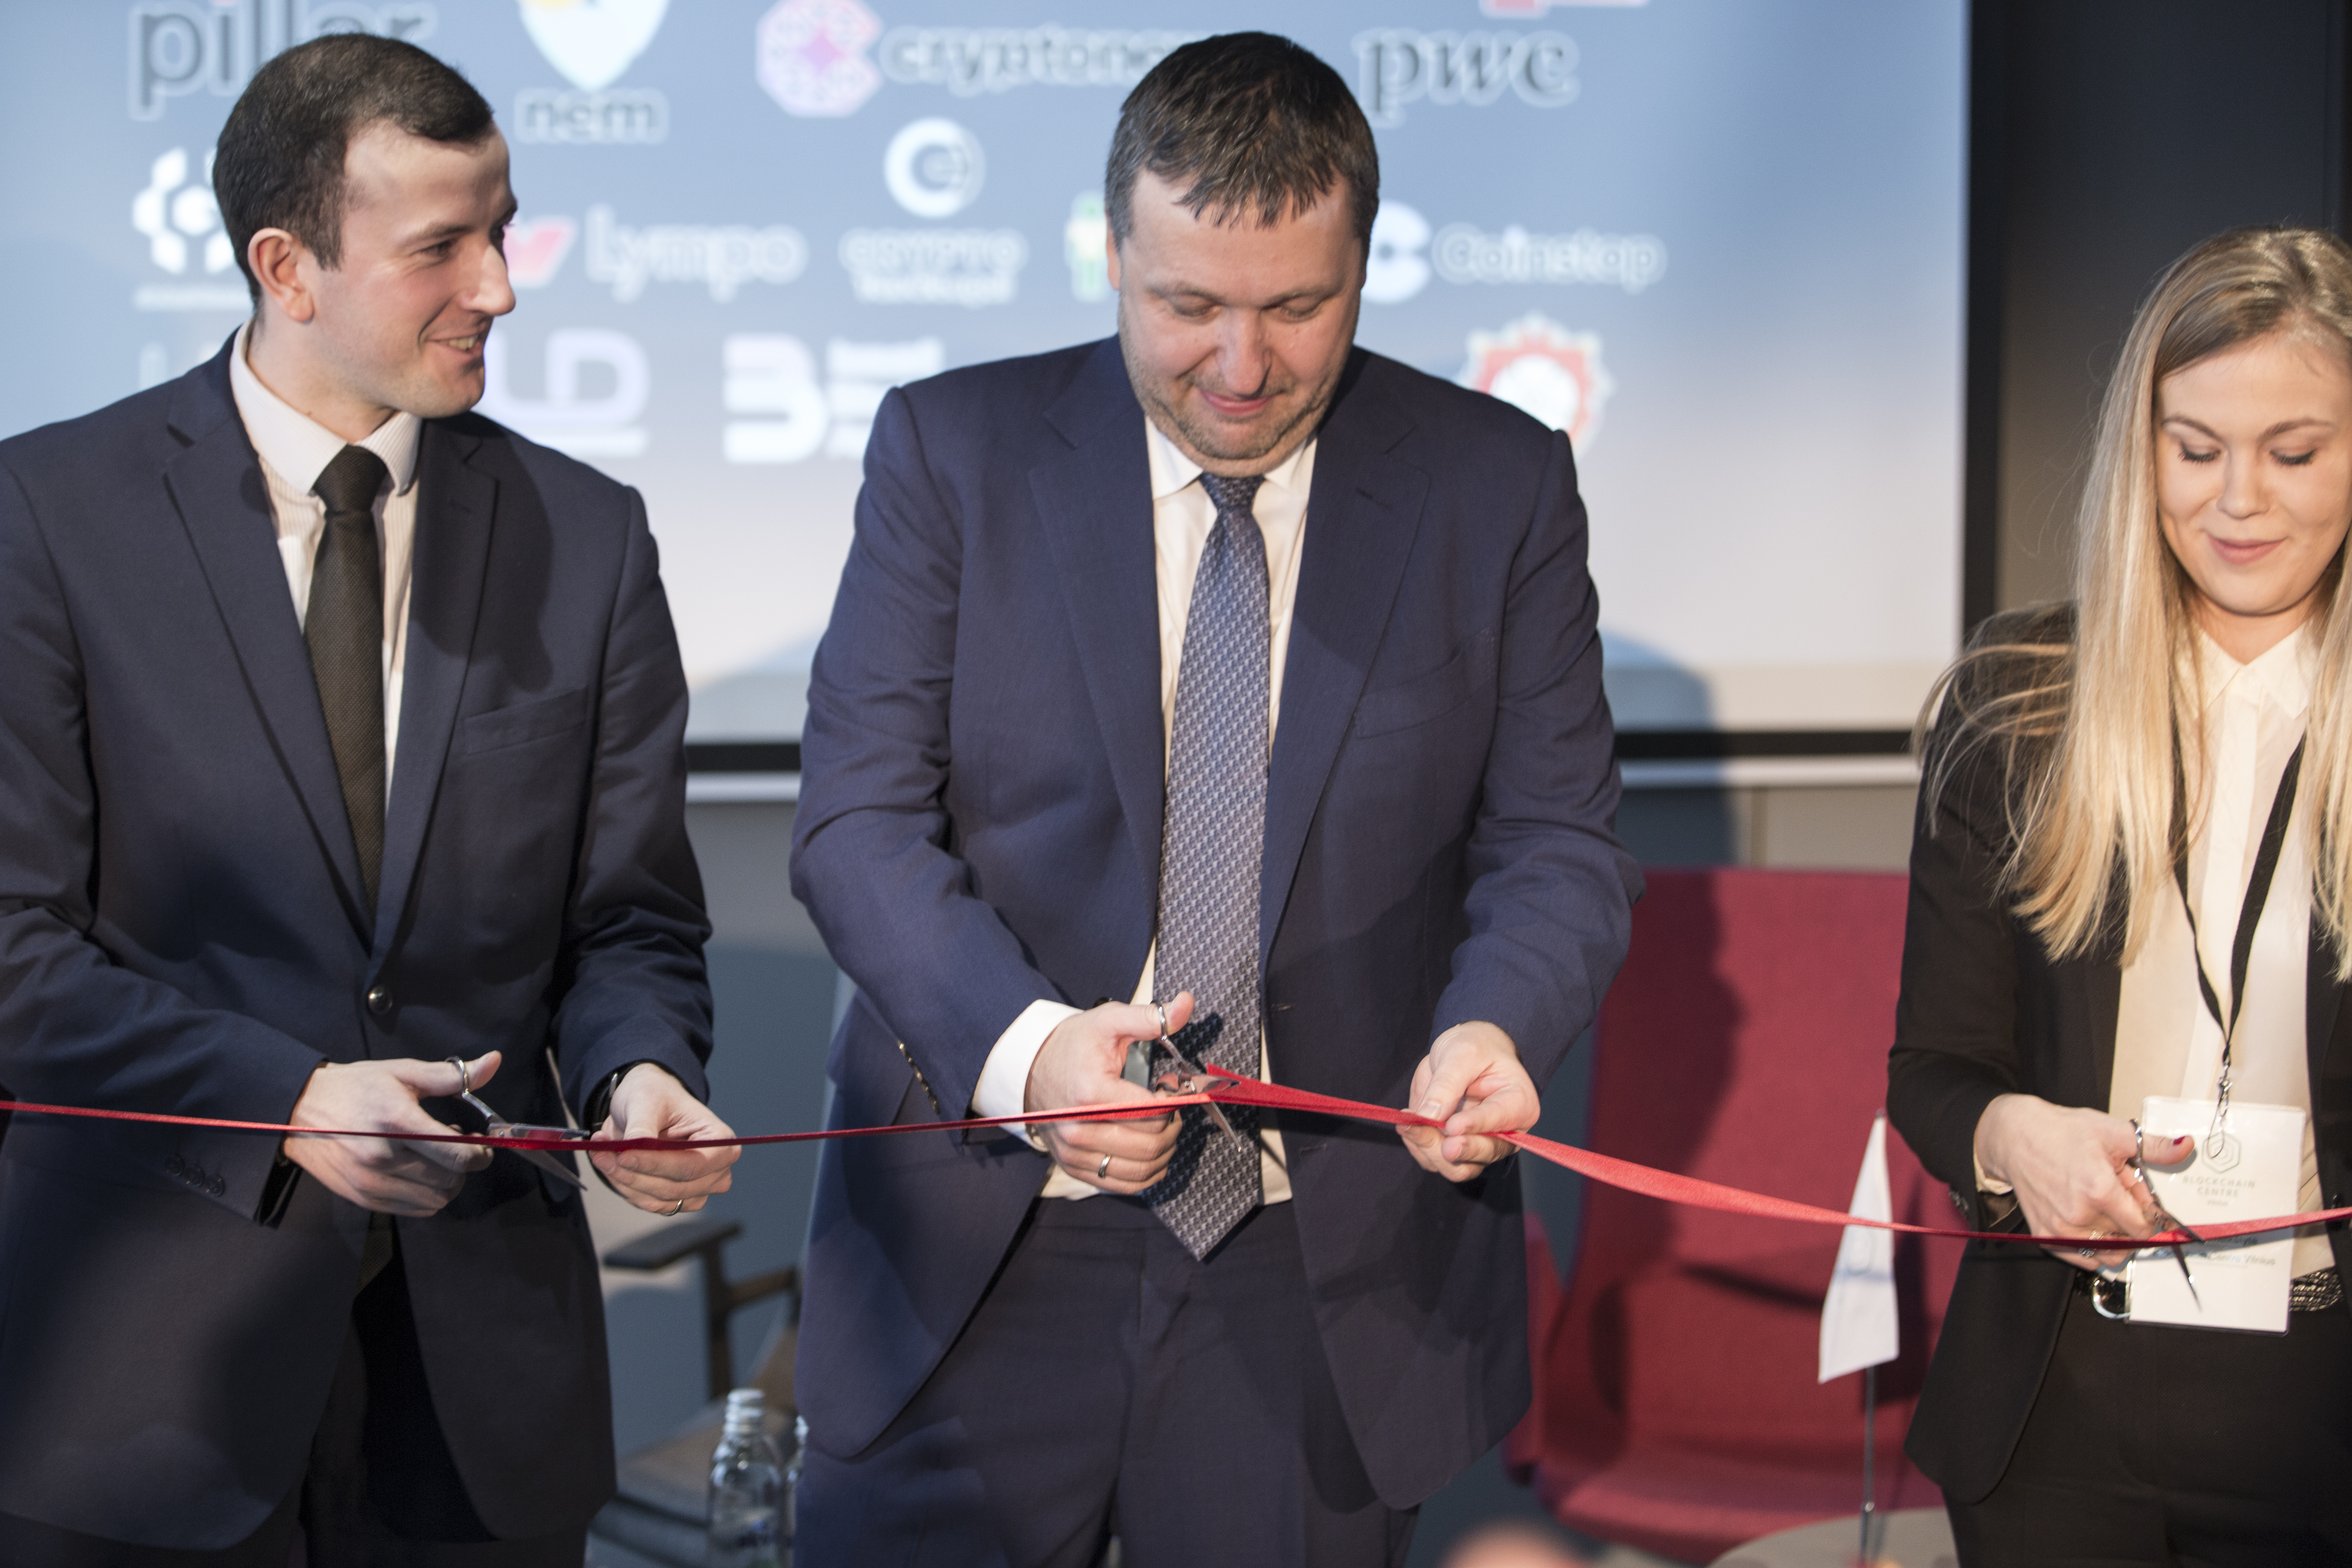 First European Blockchain Centre launches in Vilnius